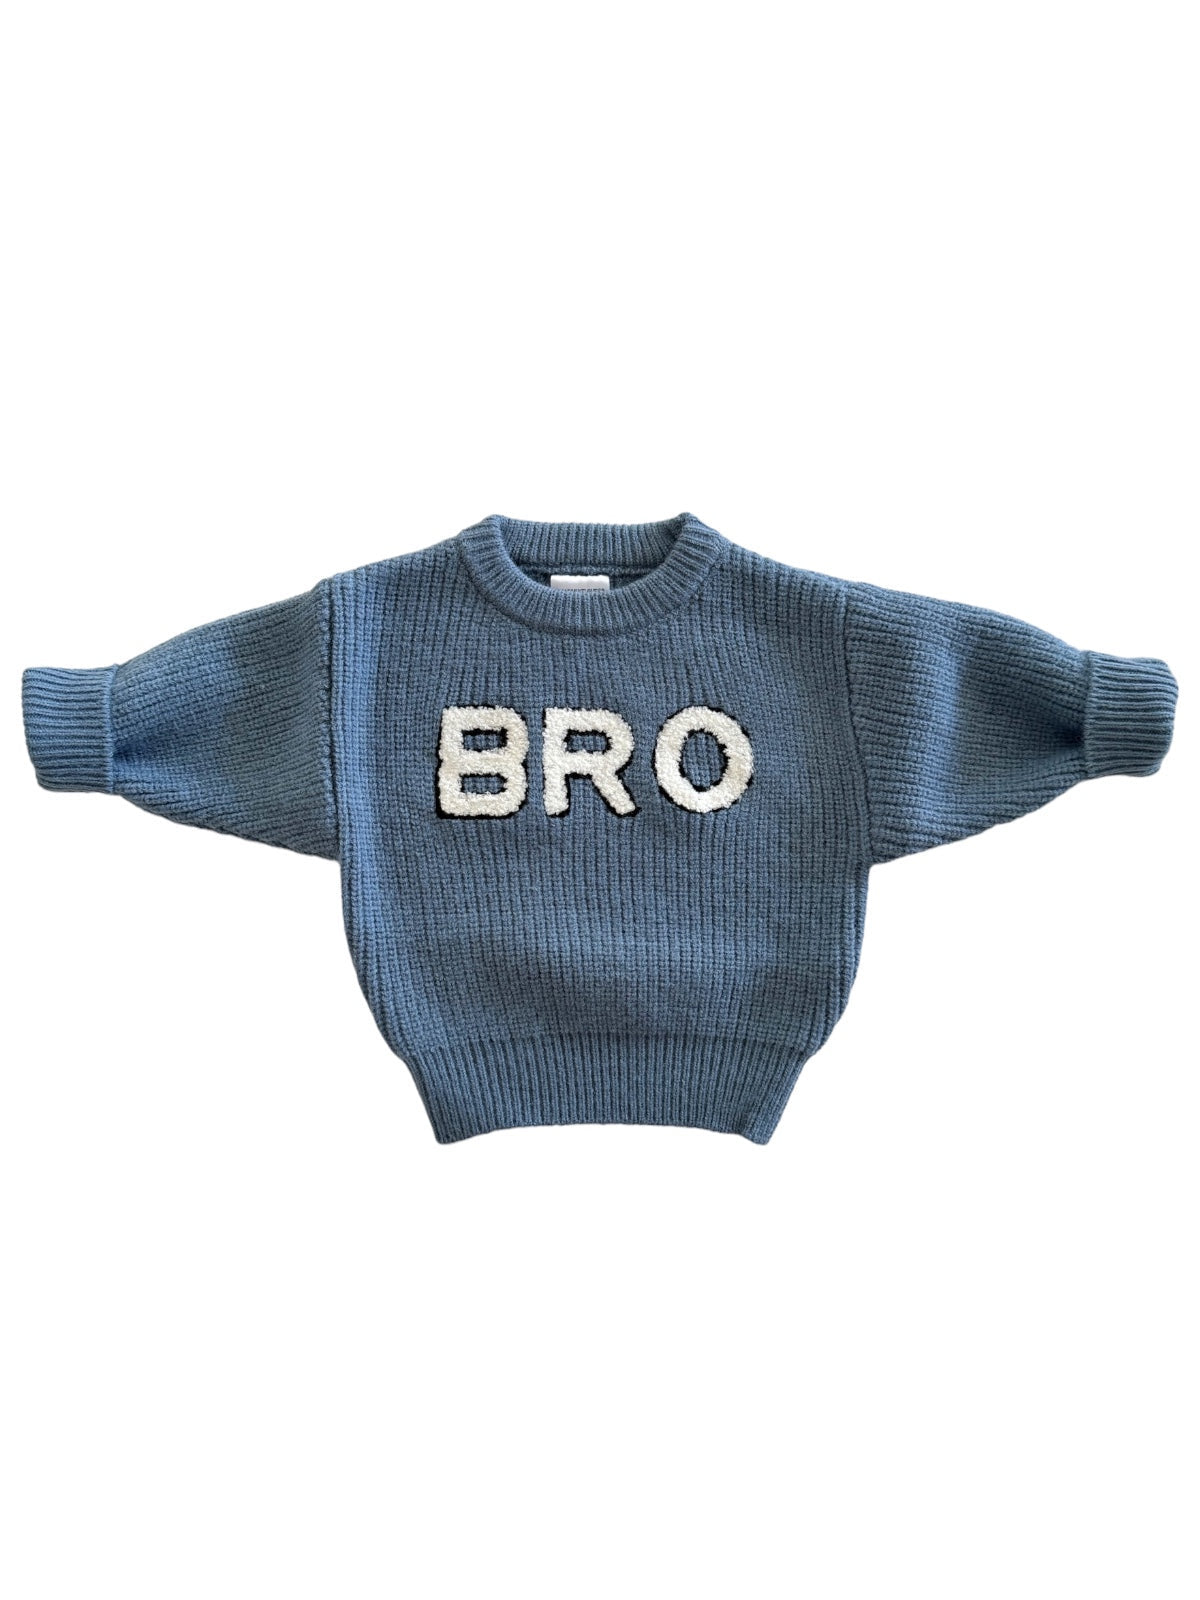 Bro Knit Sweater, Slate